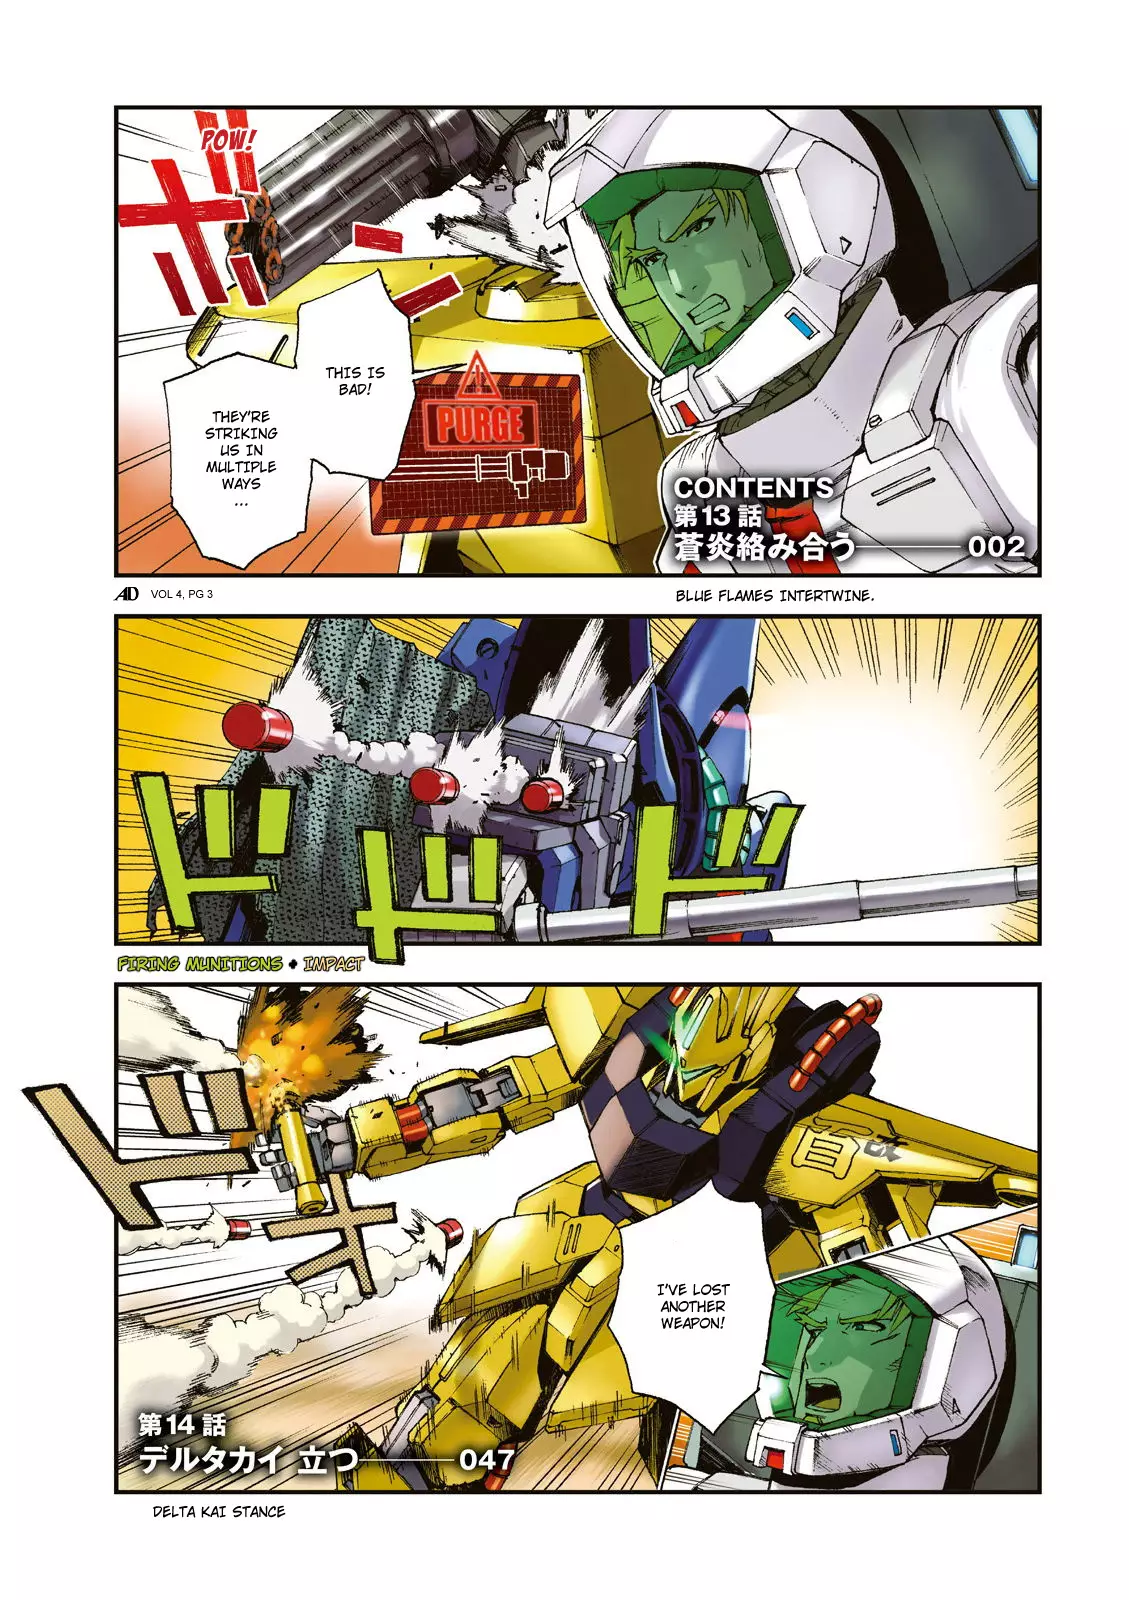 Kidou Senshi Gundam U.c. 0094 - Across The Sky - 13 page 4-861e561a